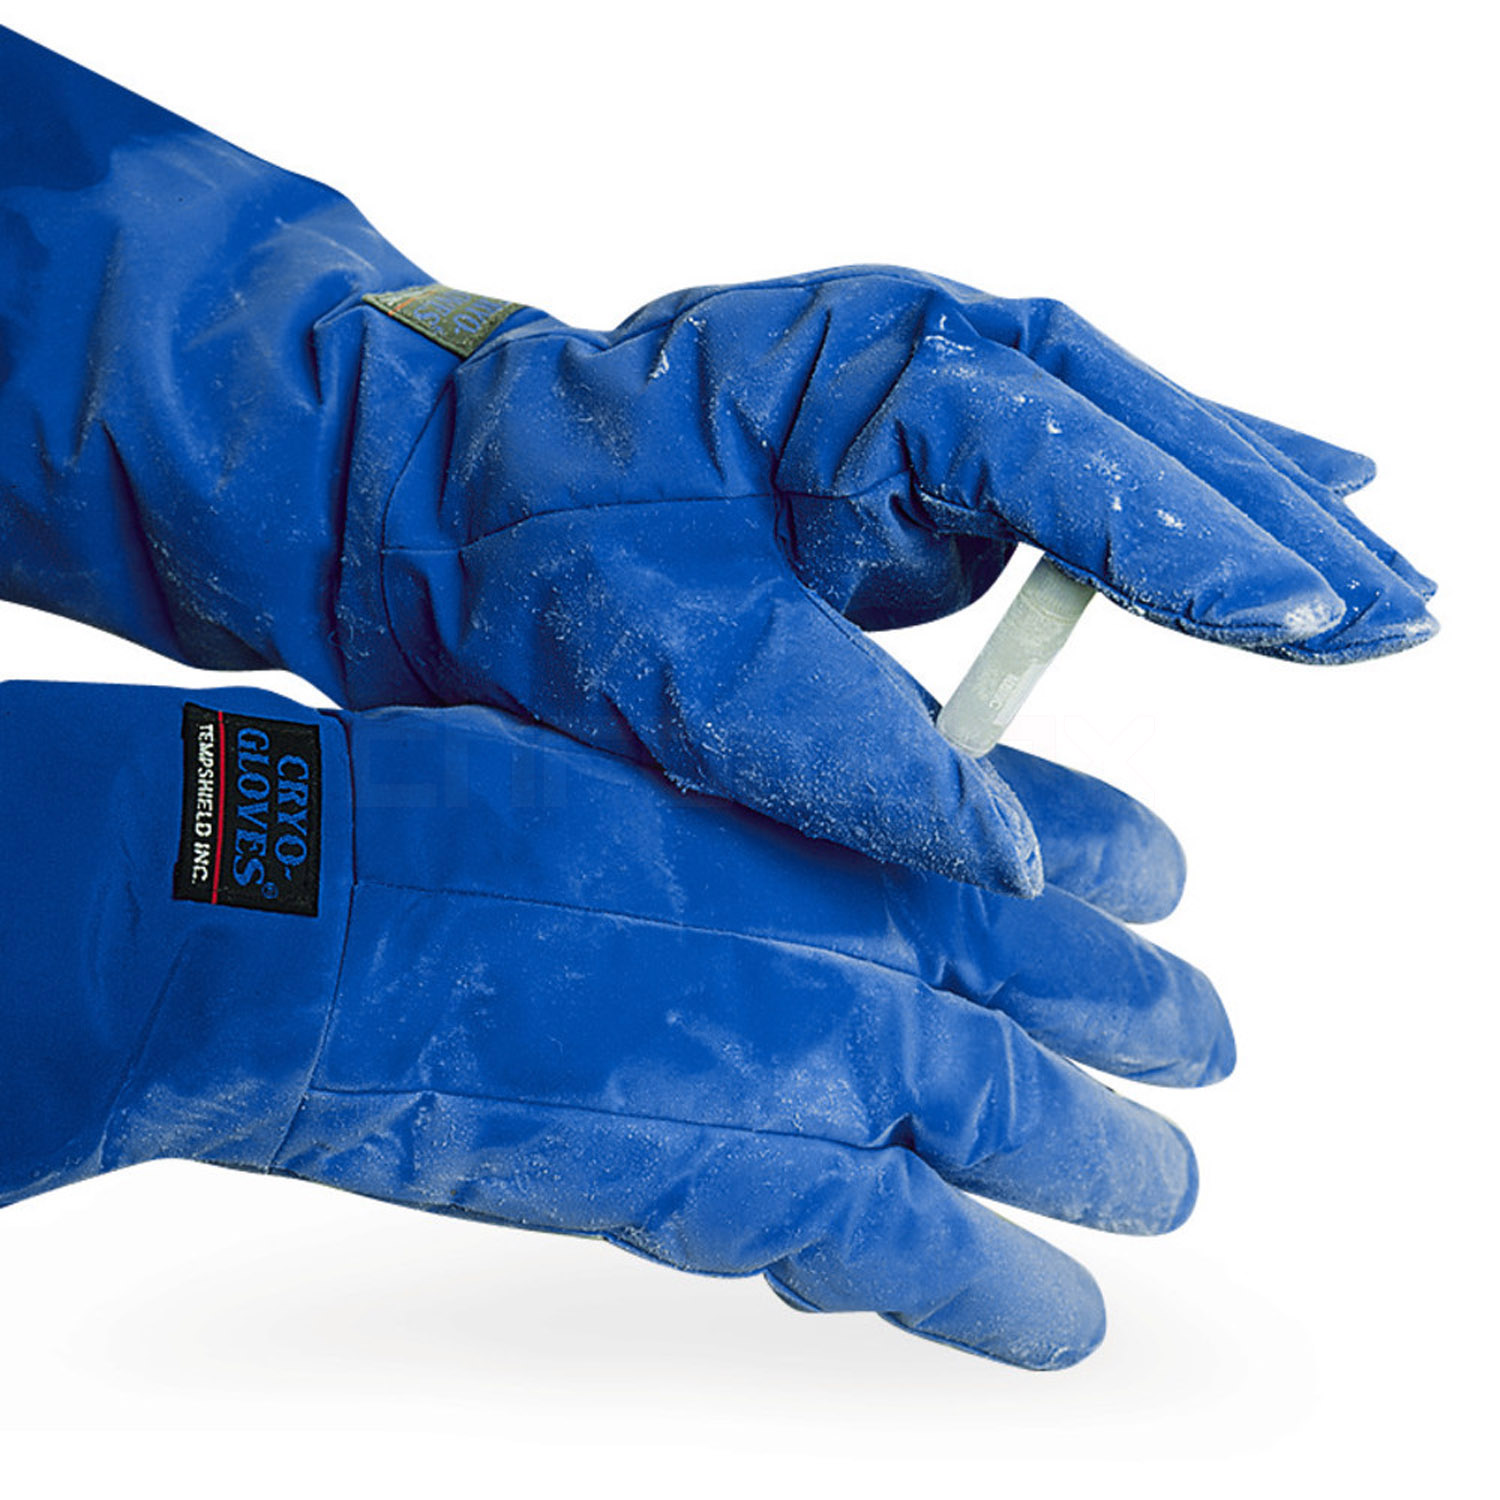 Cryo Gloves